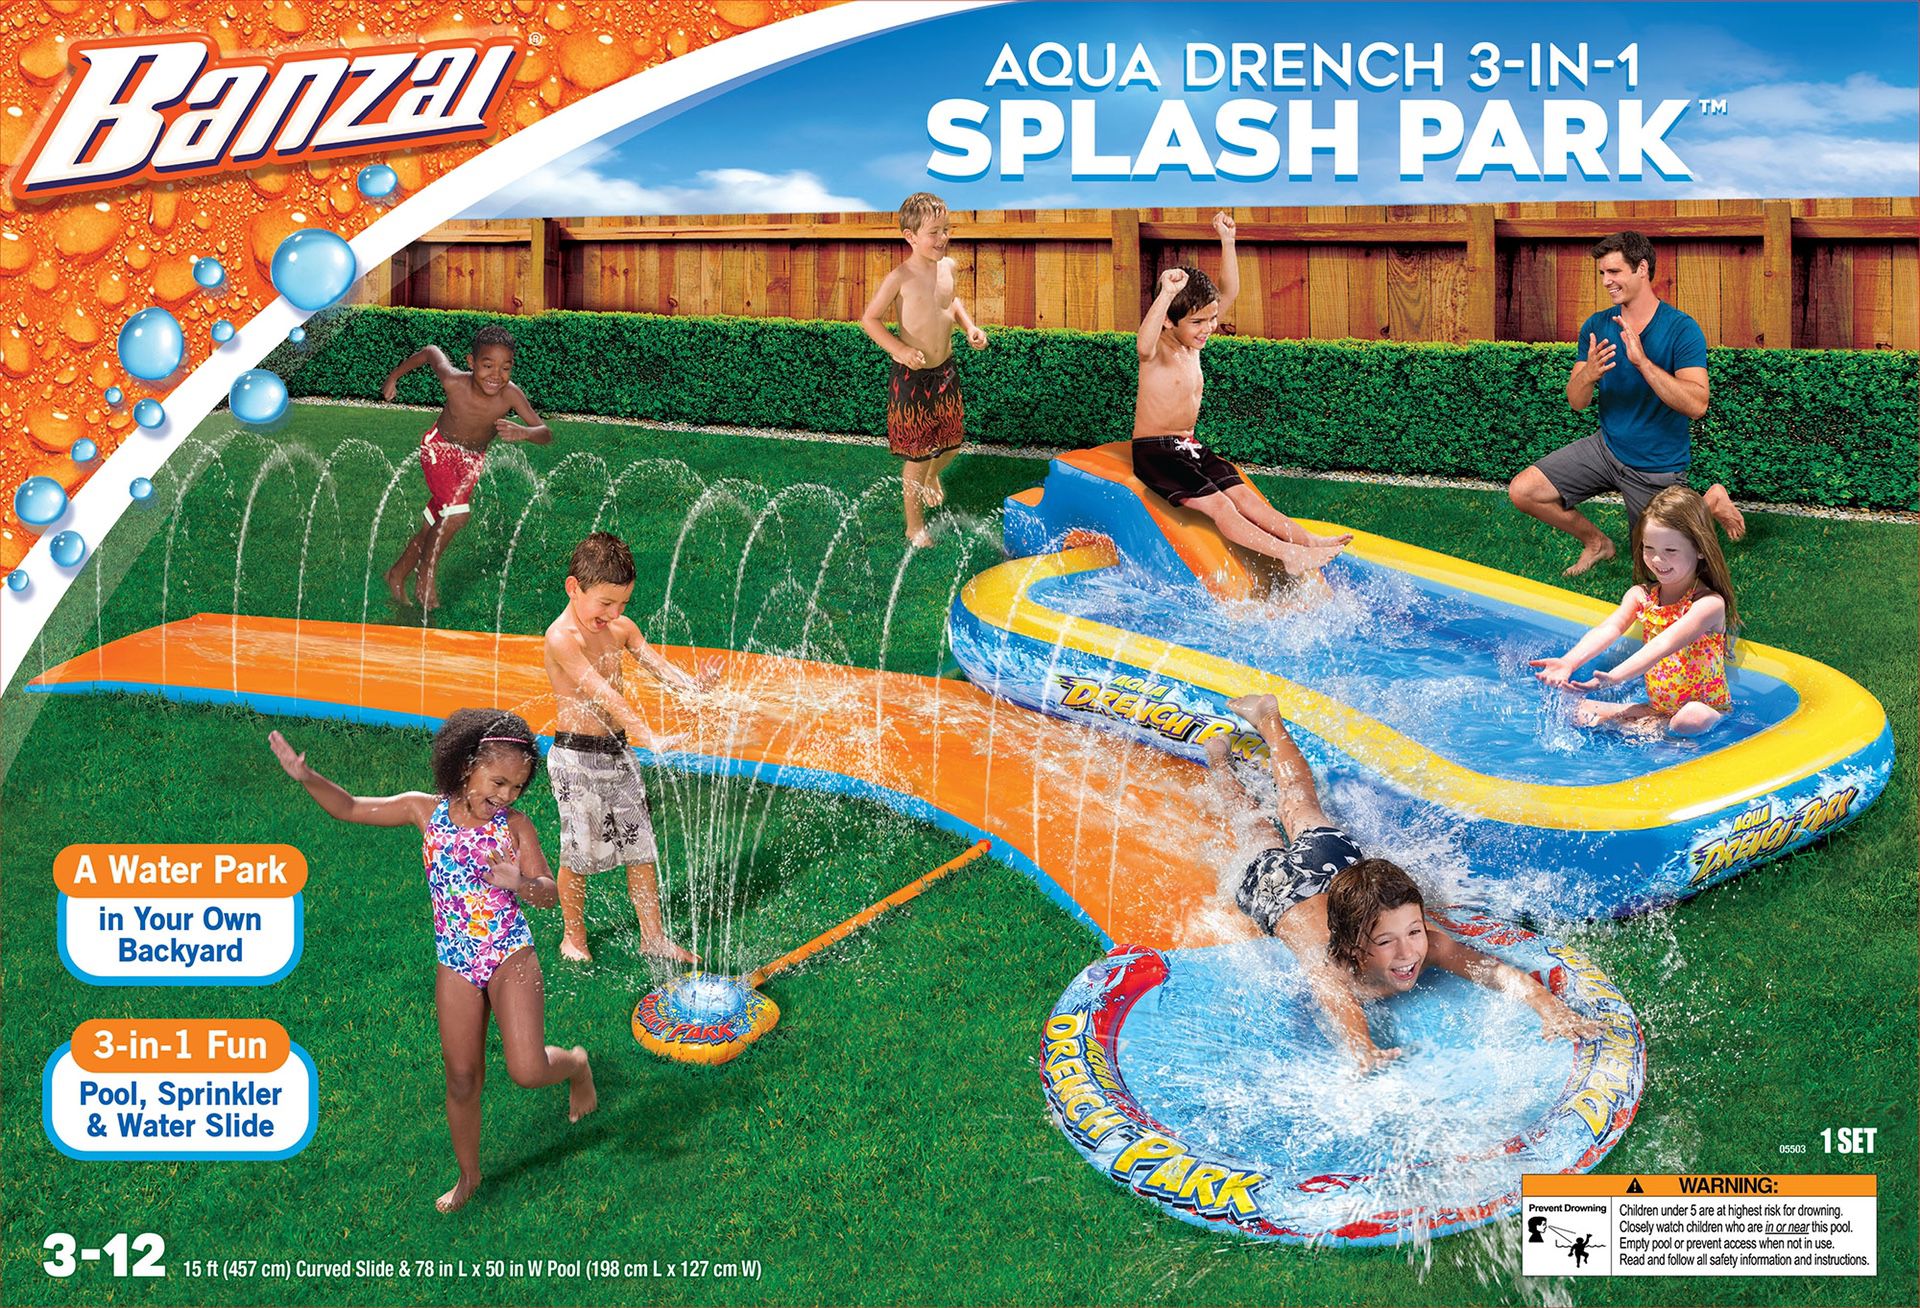 Pool+ Slide+ sprinkler all in one set!